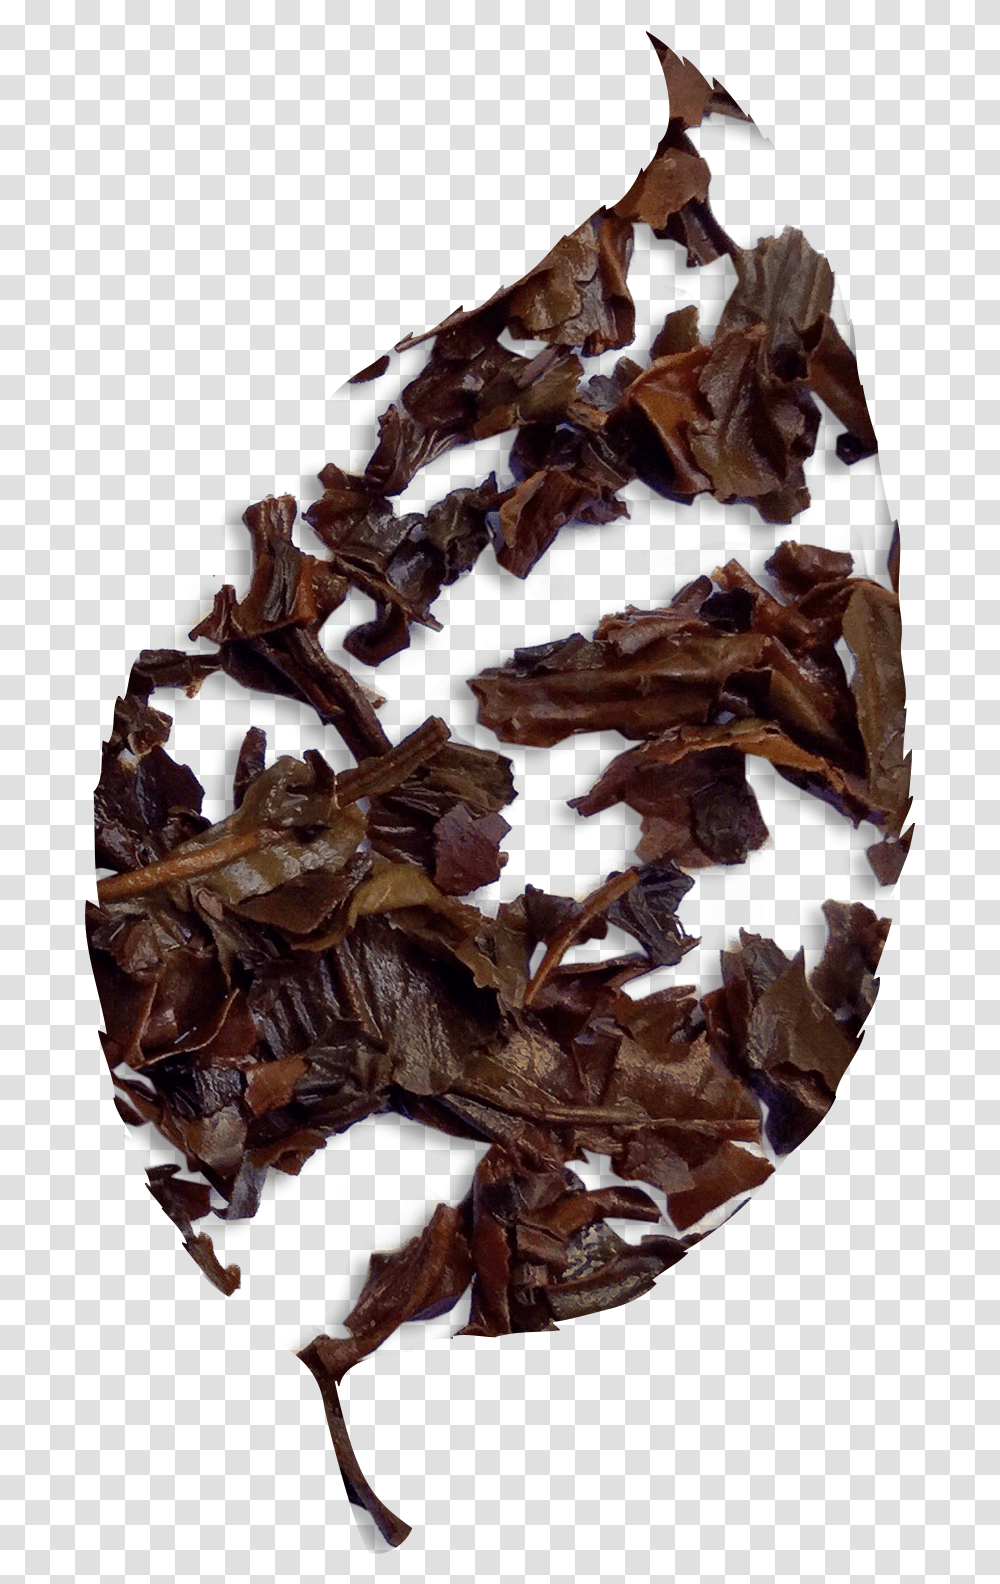 Black Tea Leaves Download Chocolate, Leaf, Plant, Tree, Maple Transparent Png